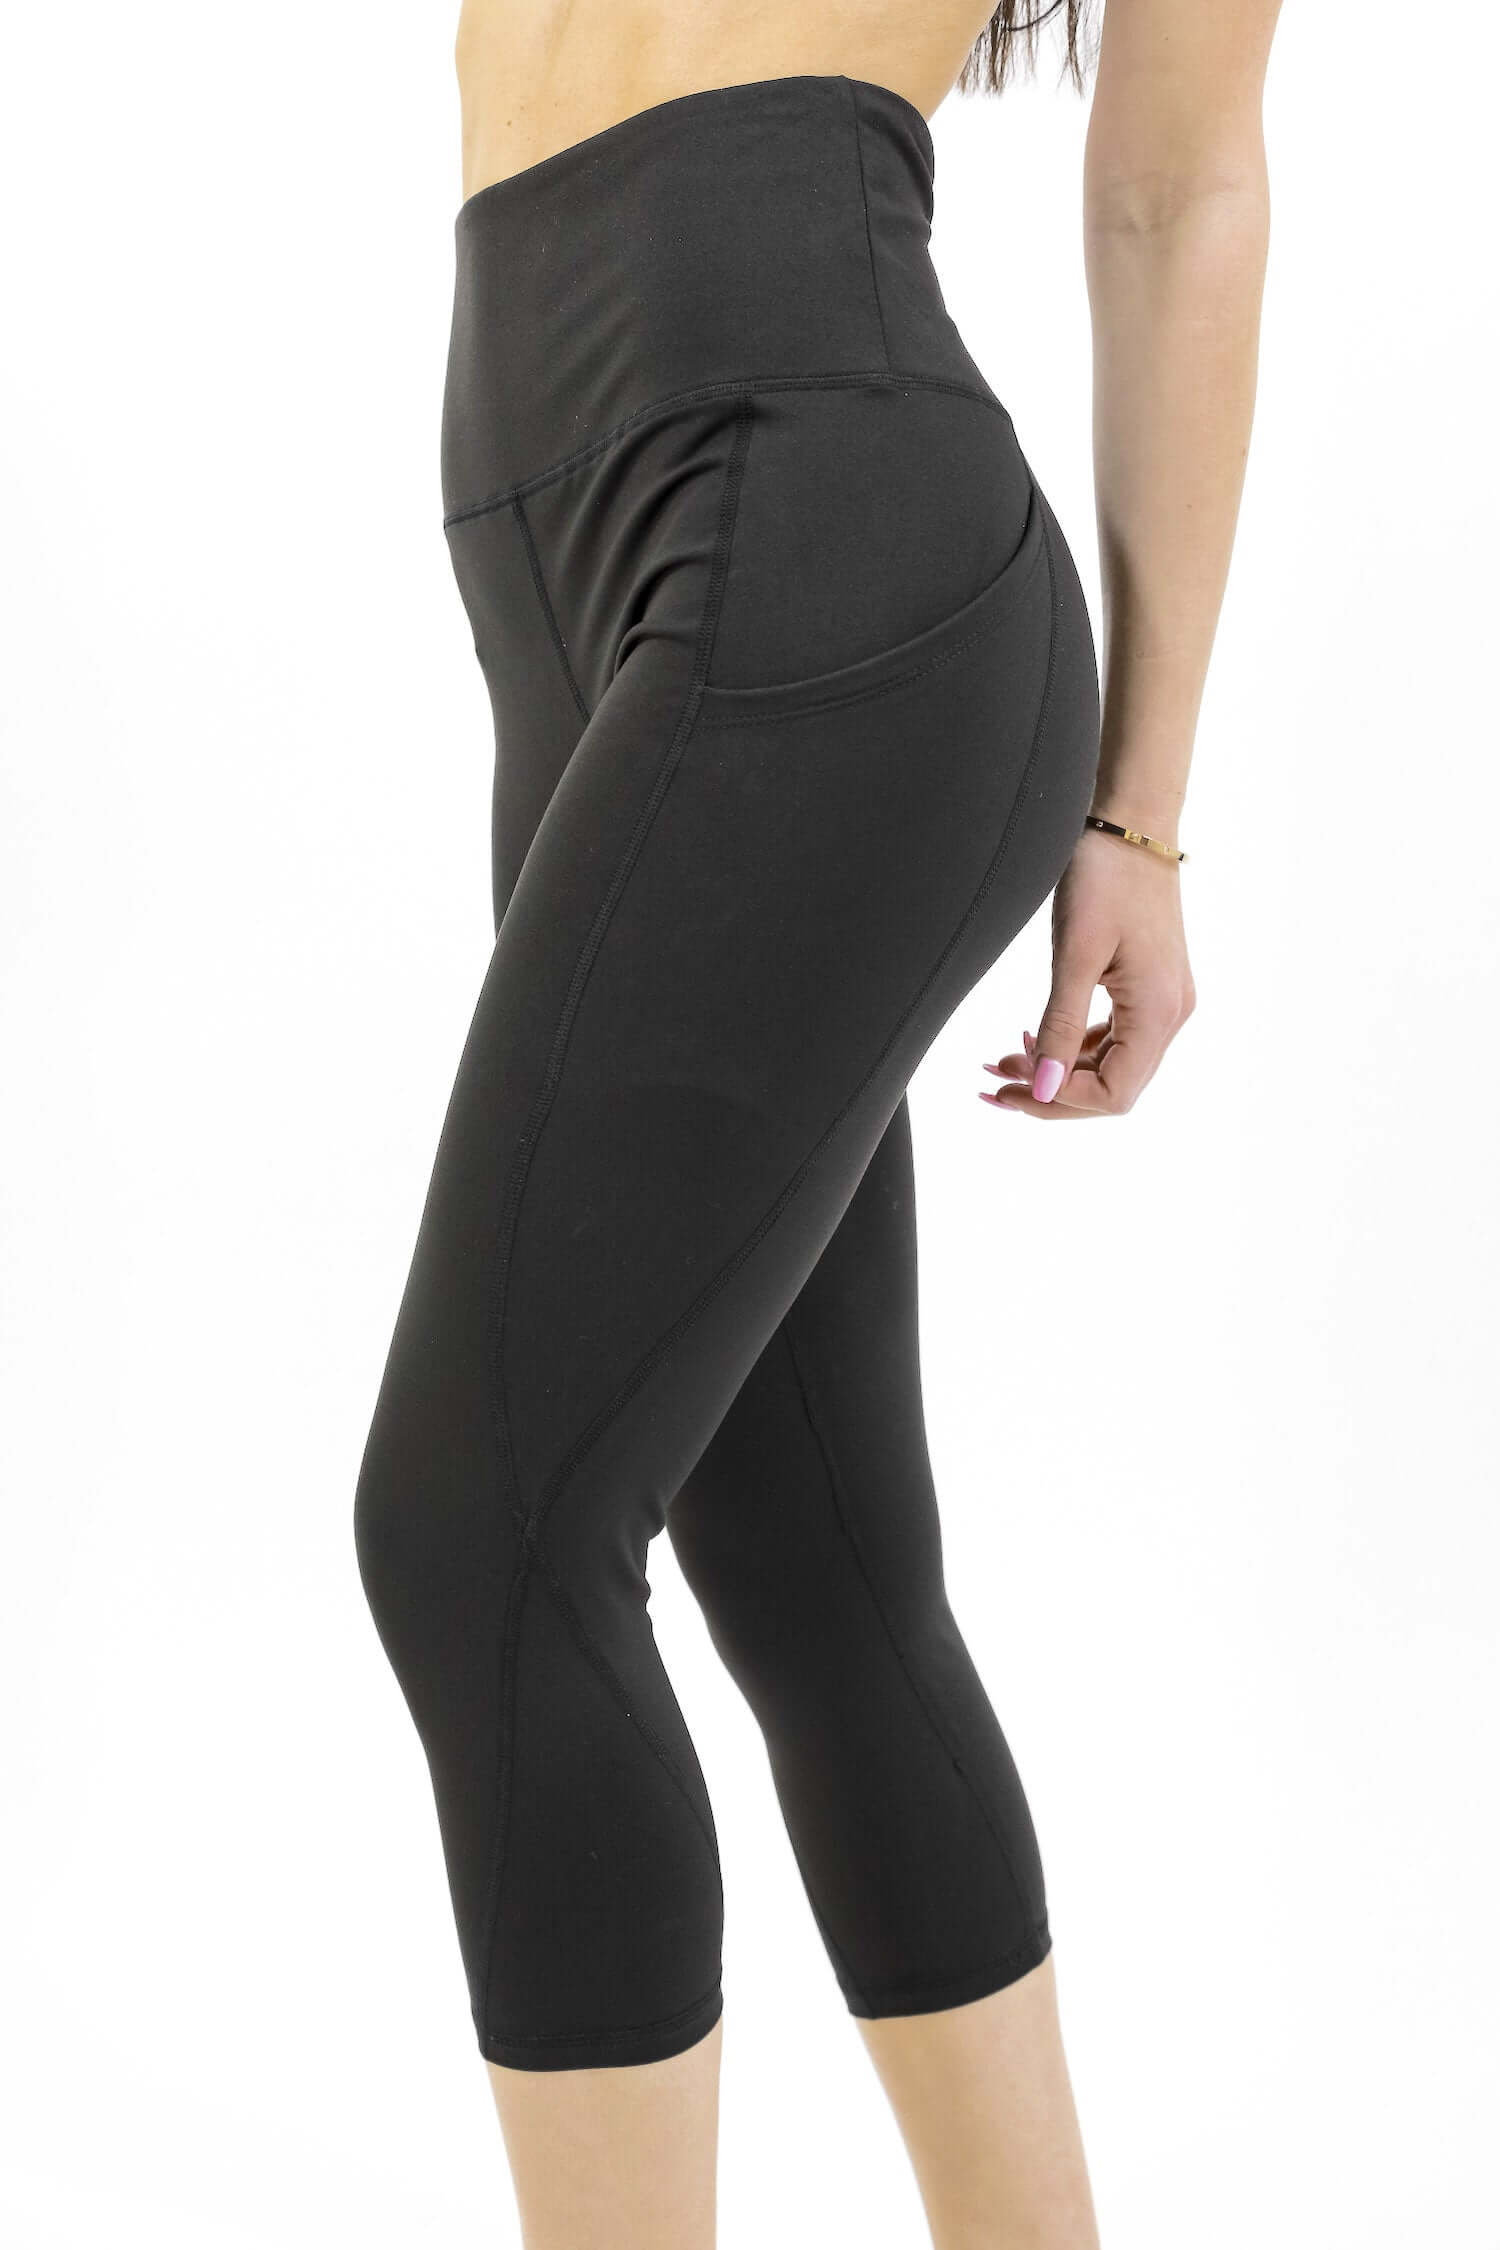 2 Packs Seamless Capri Yoga Pants - HY61 - 2 Packs Black / S-M